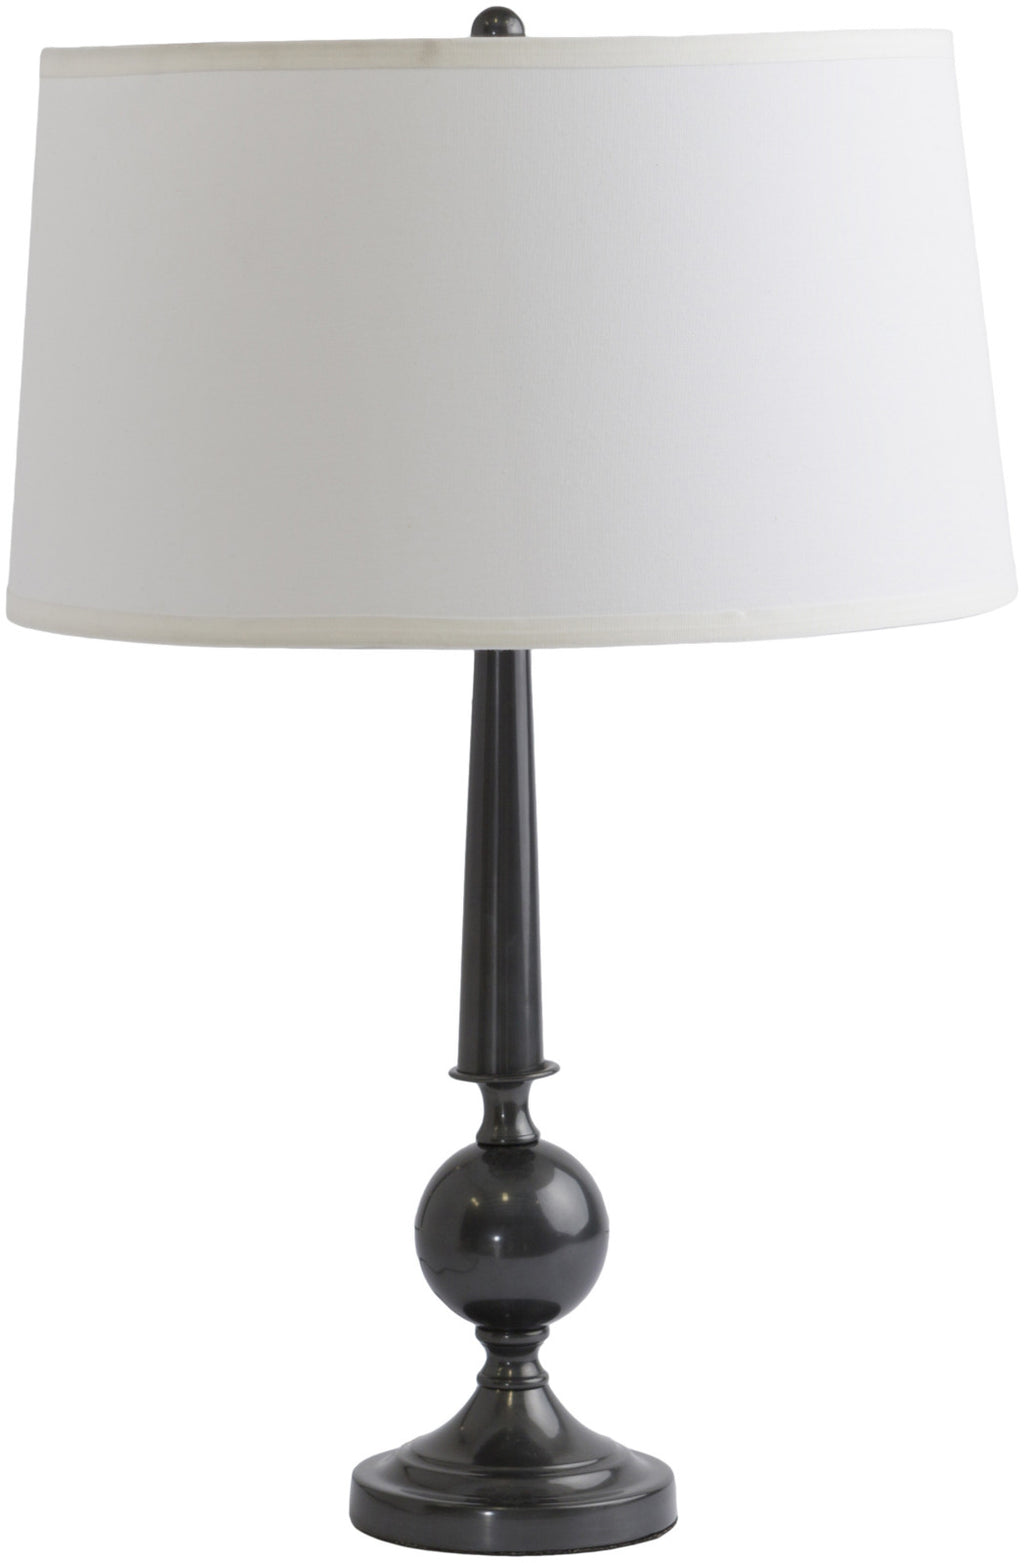 Surya Paxton PXLP-001 ivory Lamp Table Lamp